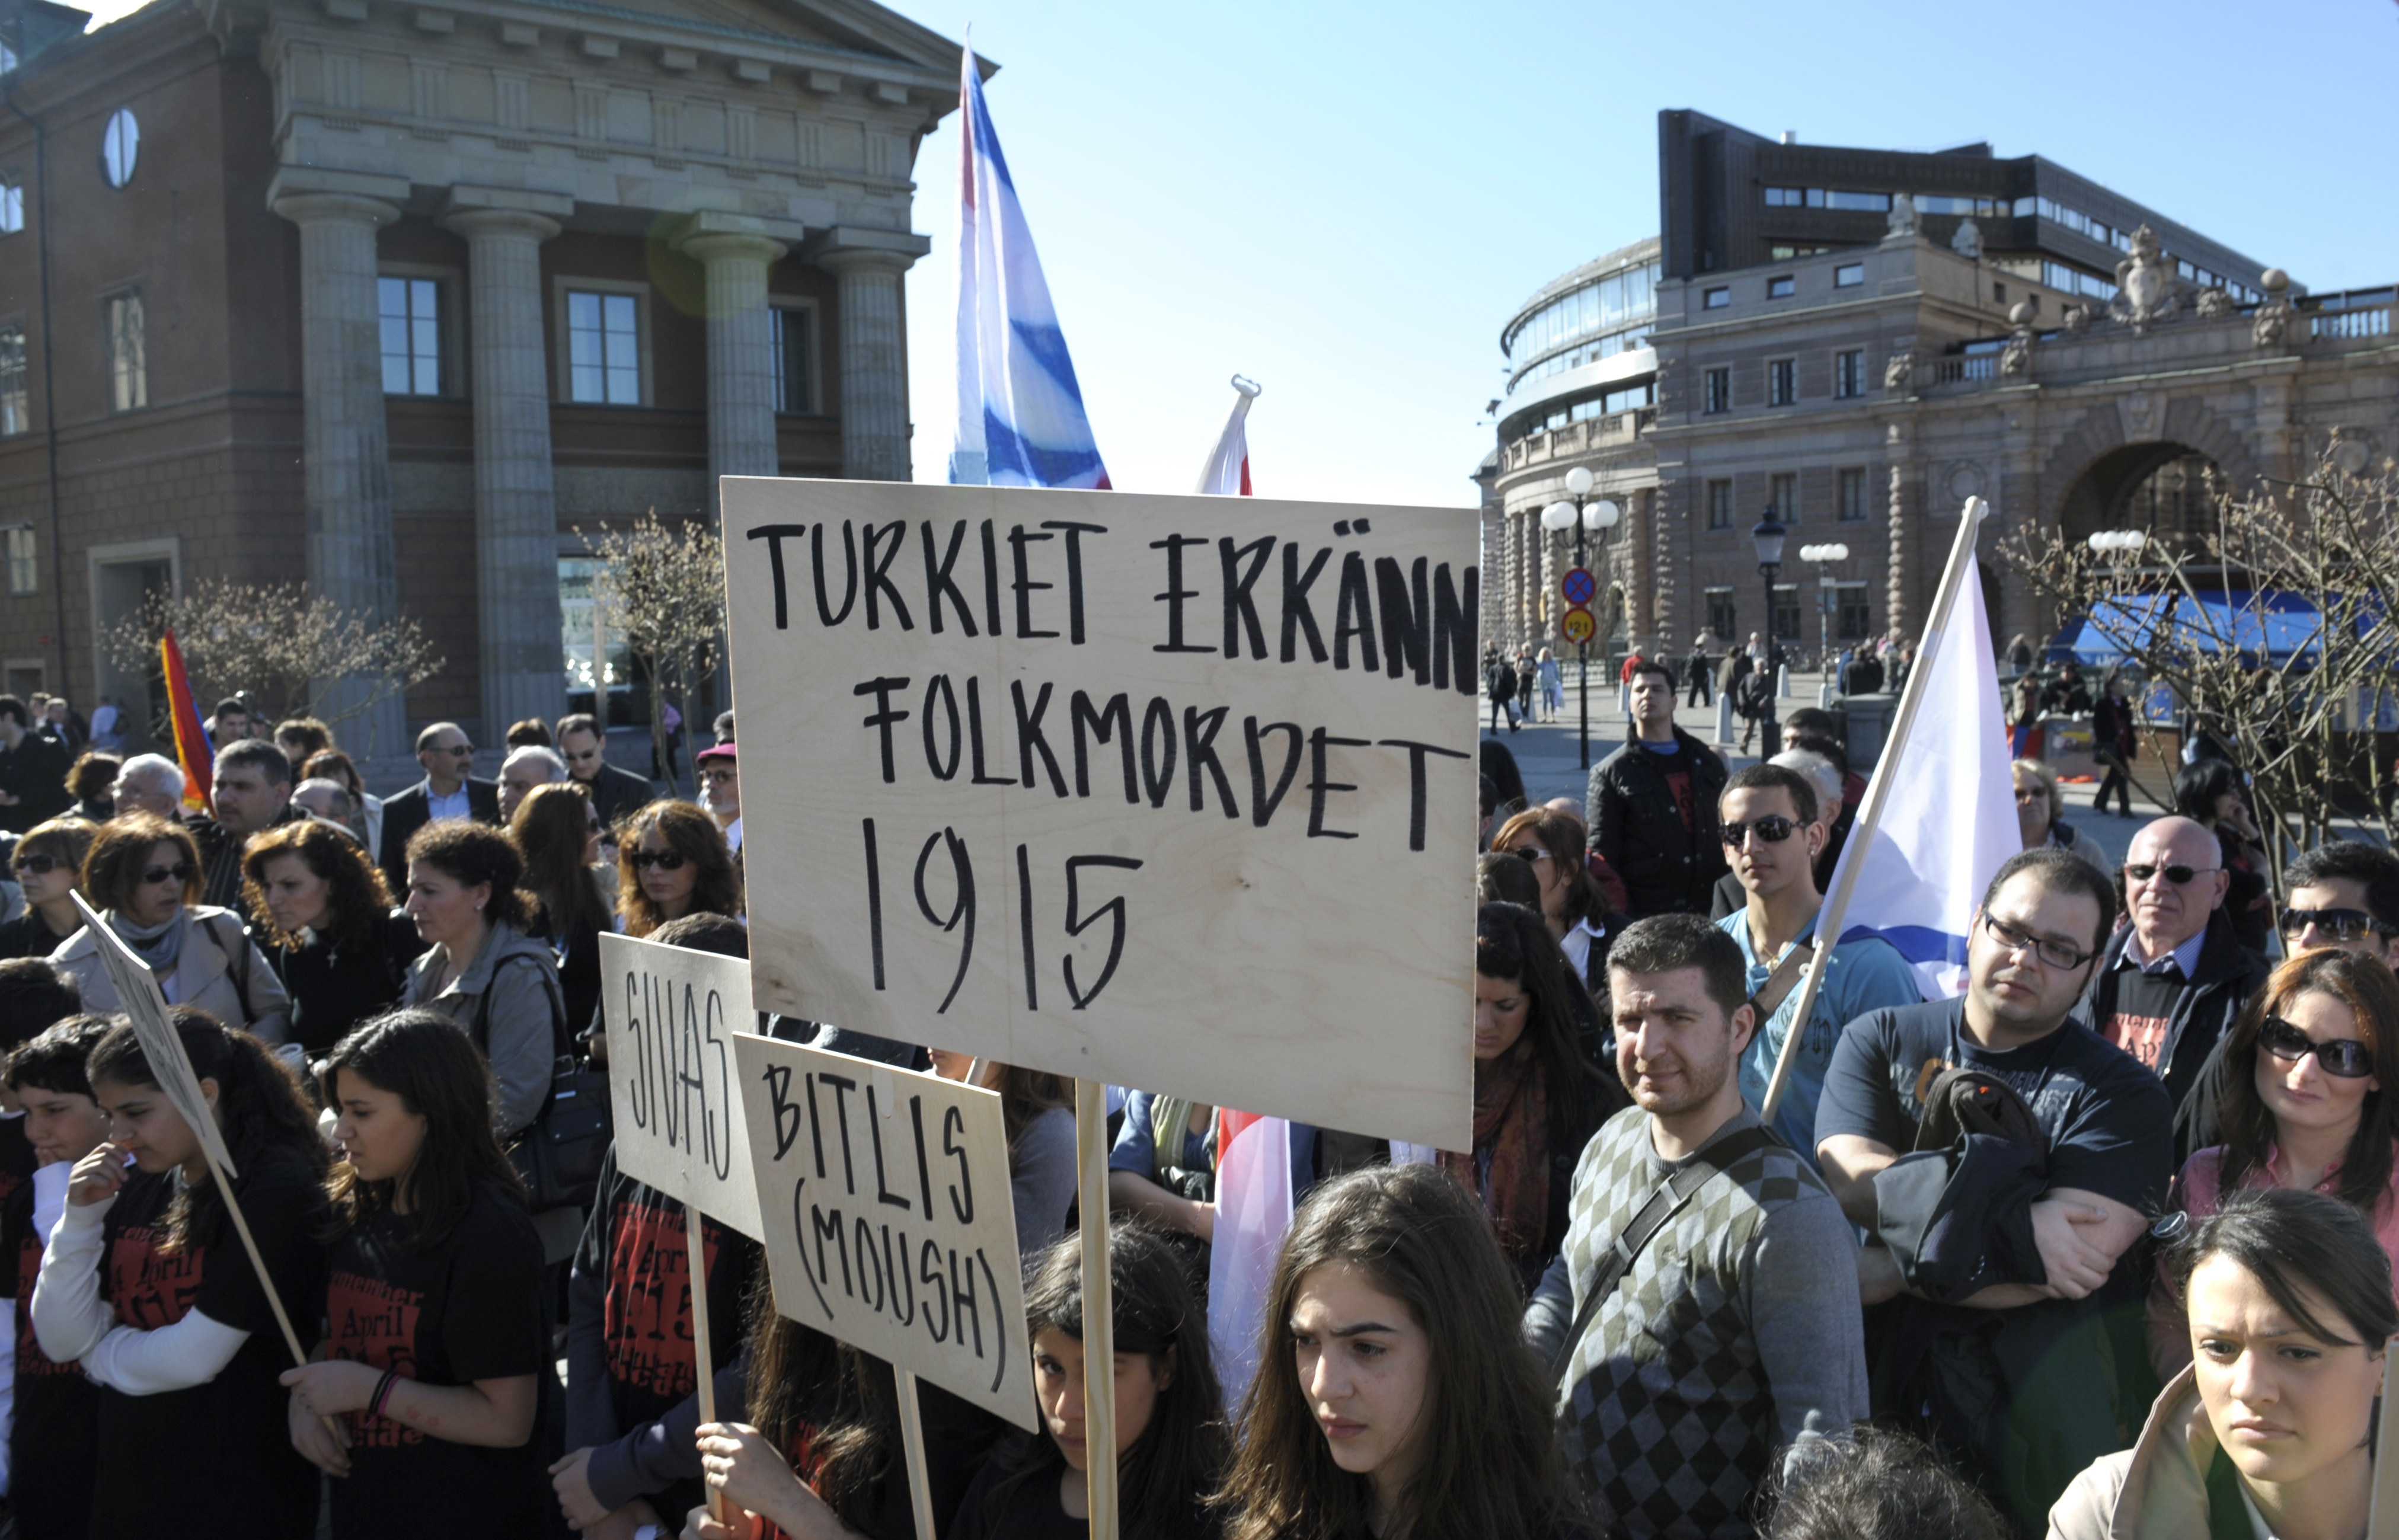 Armenier, turkiet, Folkmord, Sverige